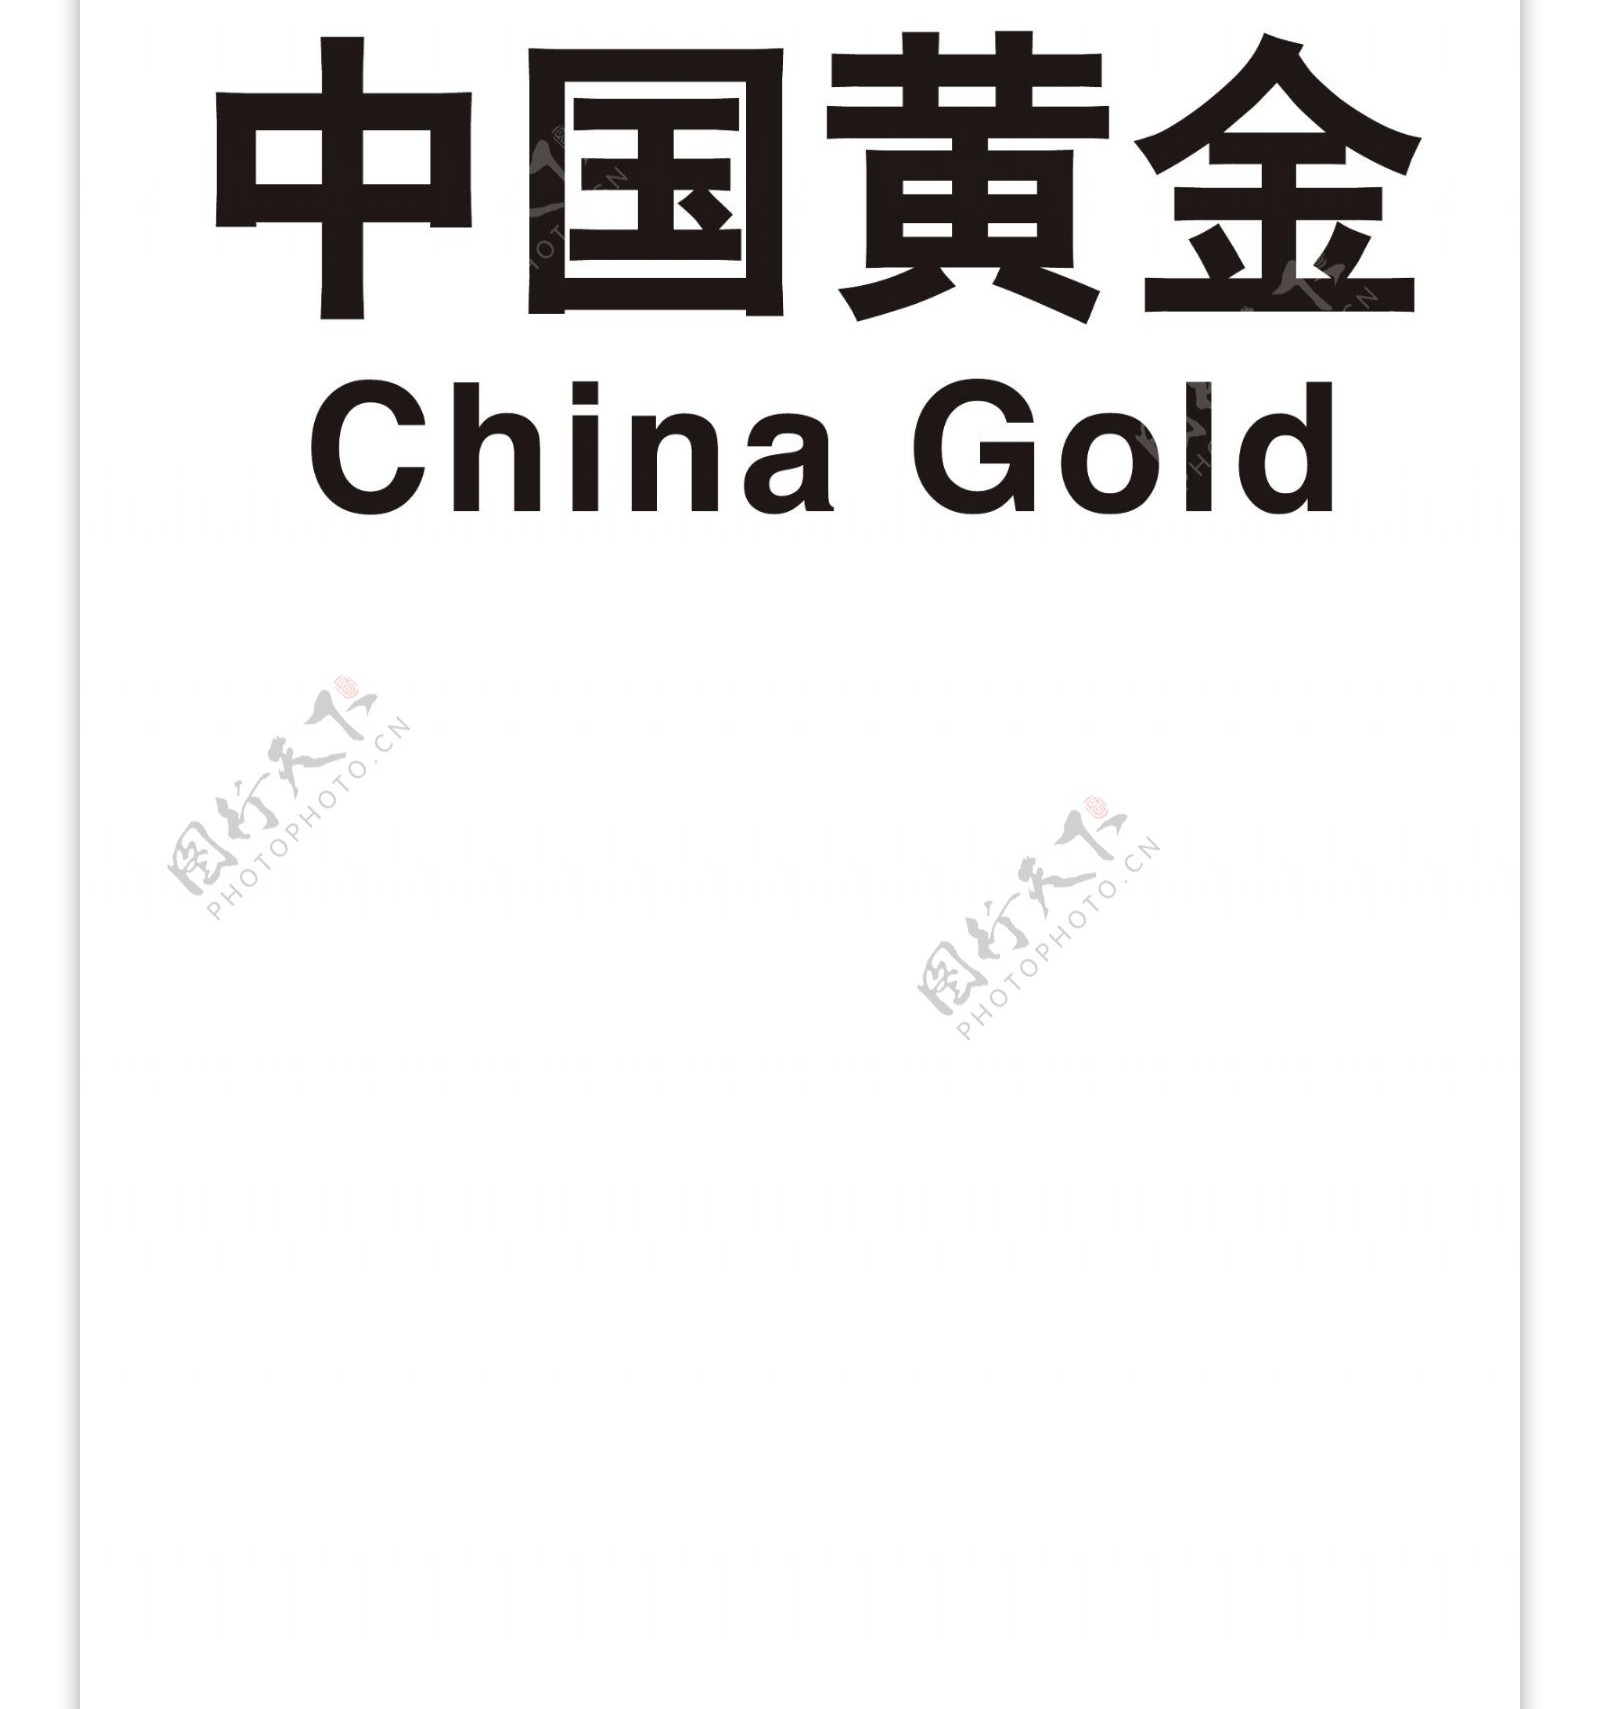 中国黄金logo源文件